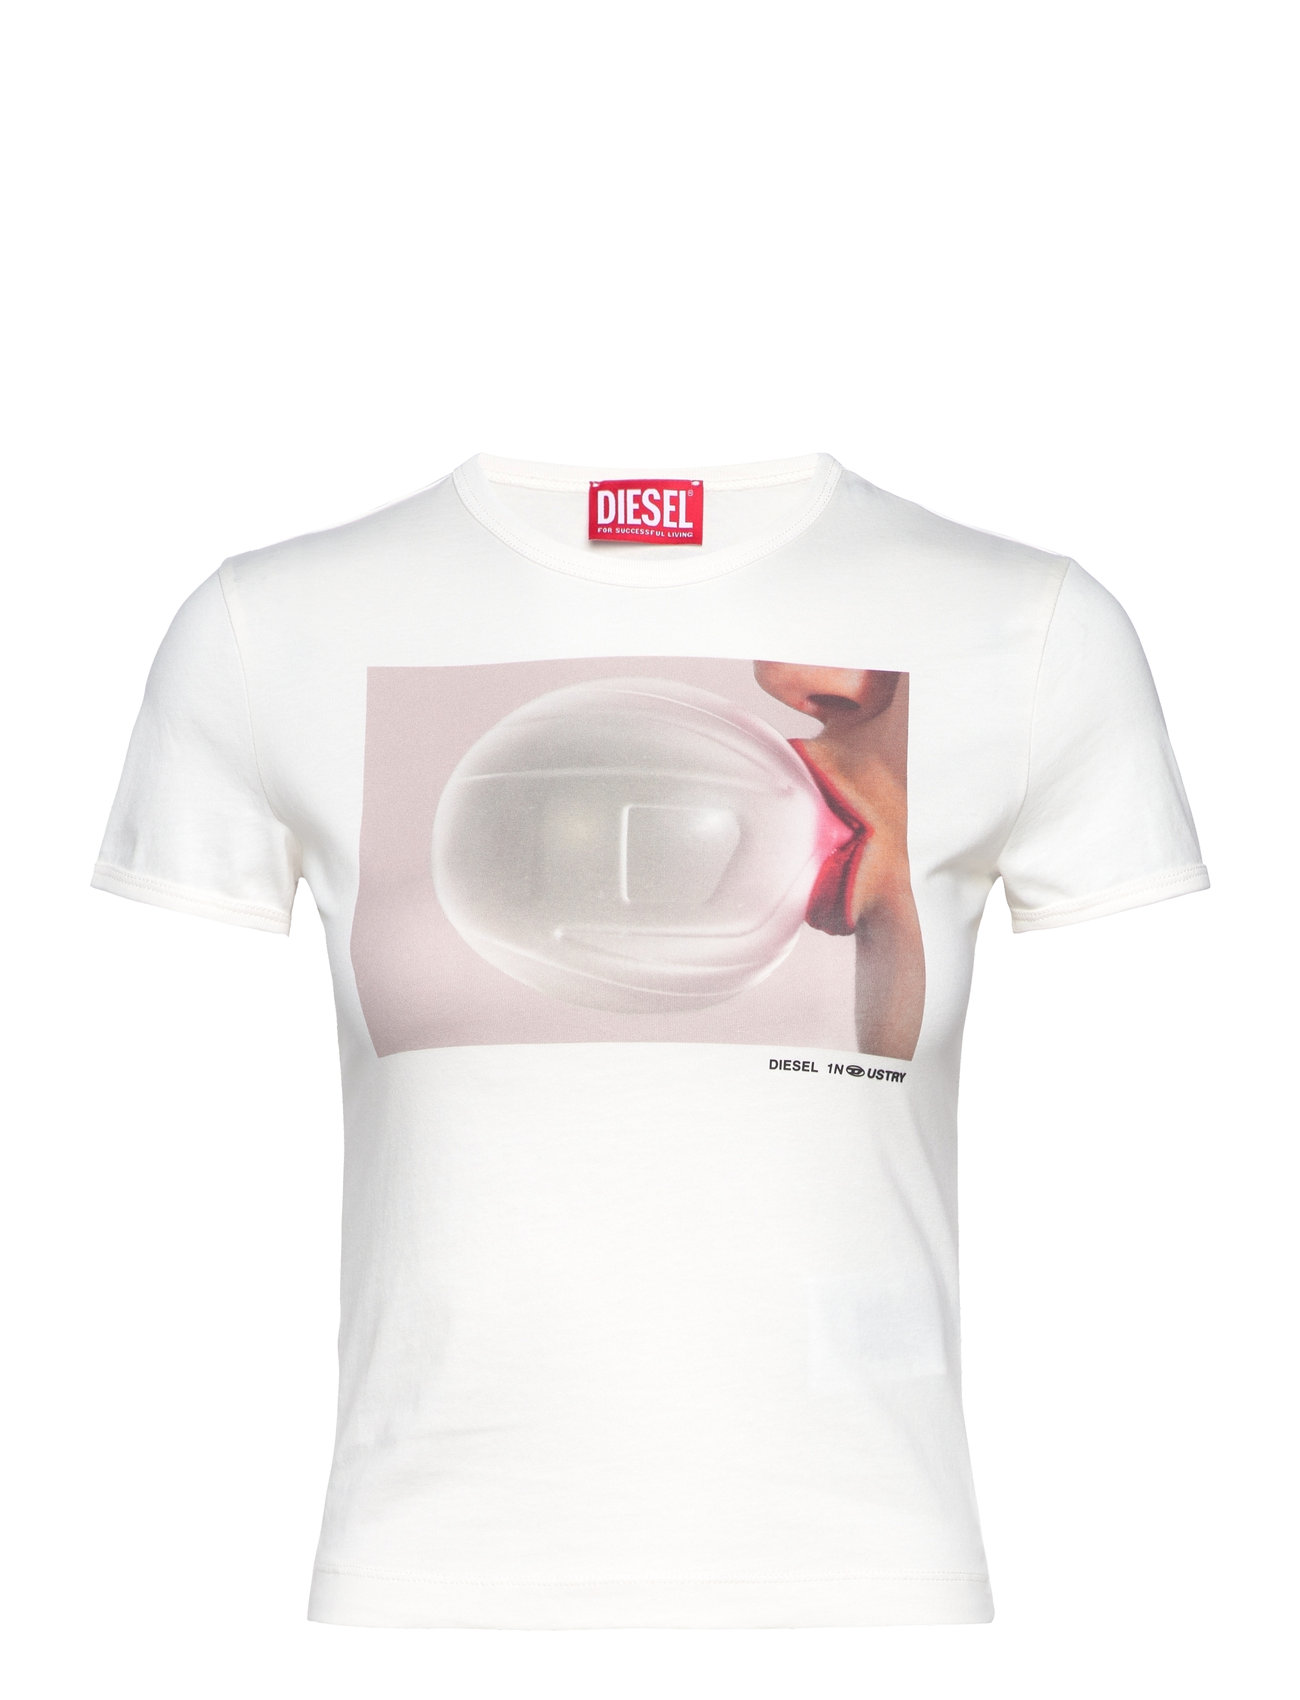 T-Uncutie-Long-N7 T-Shirt Tops T-shirts & Tops Short-sleeved White Diesel